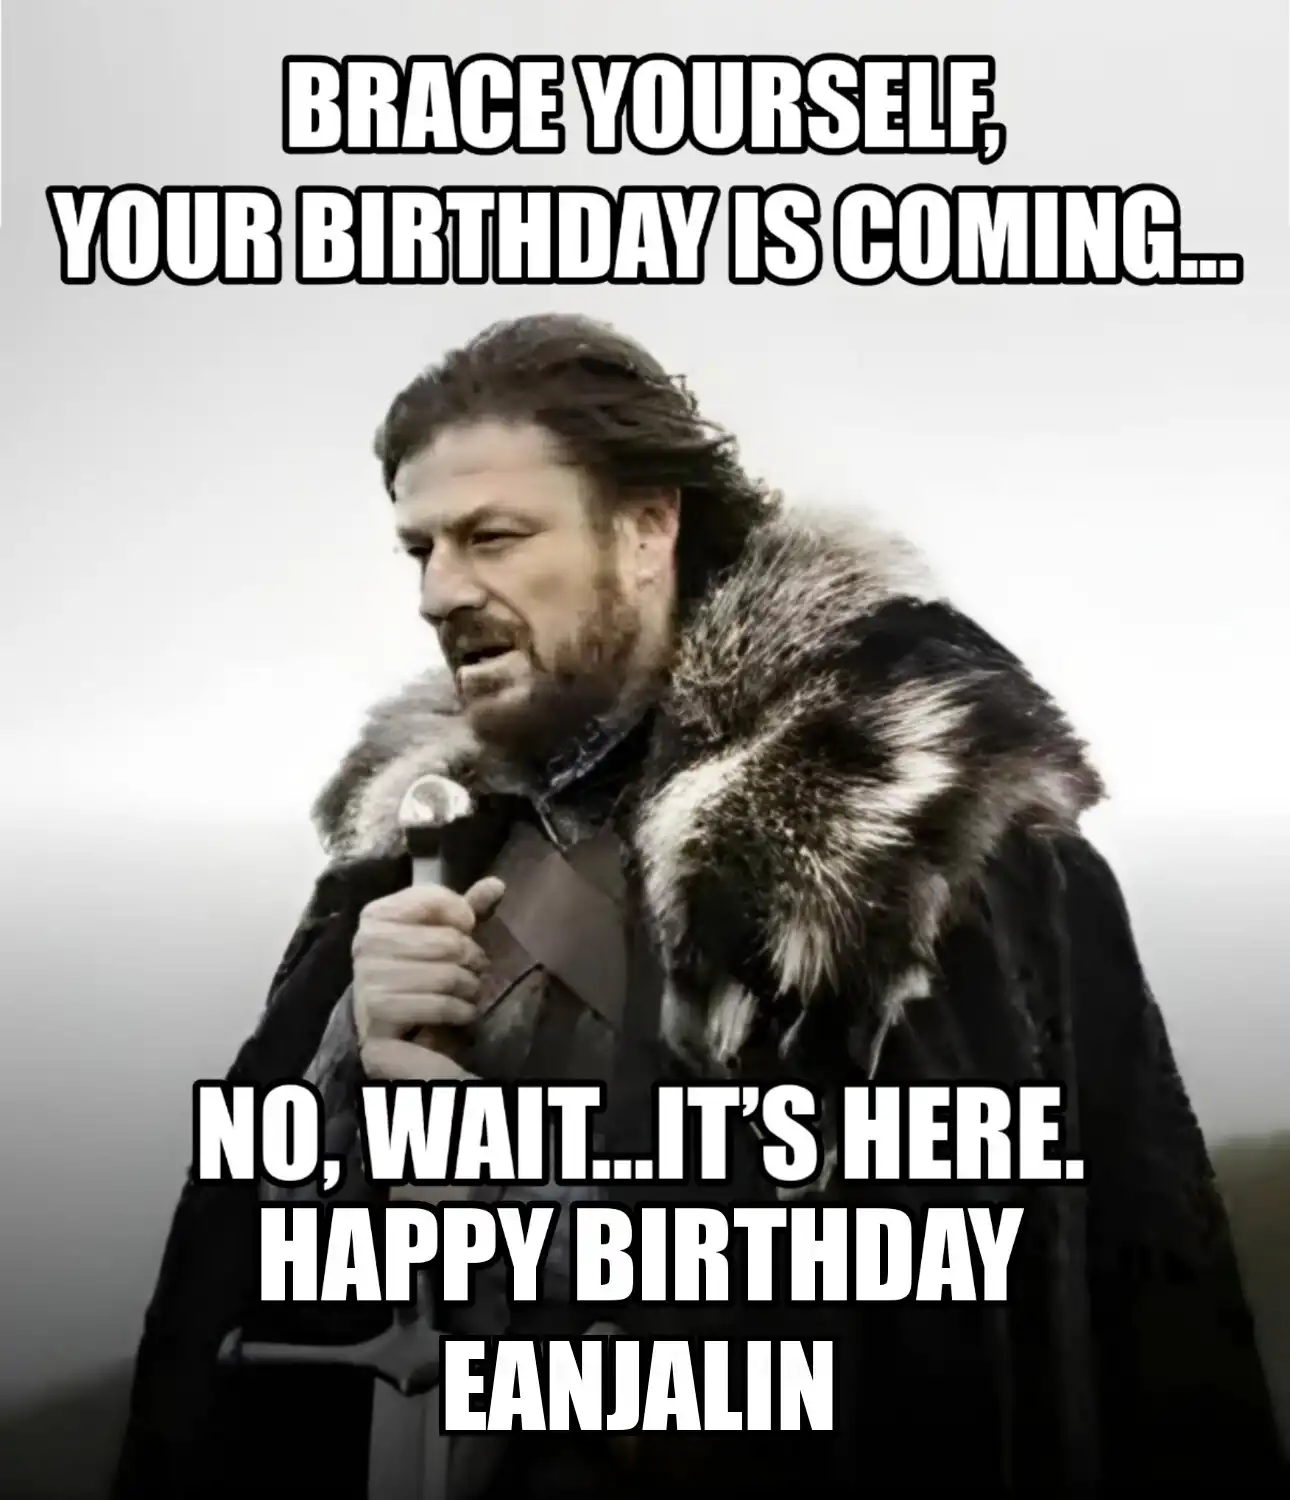 Happy Birthday Eanjalin Brace Yourself Your Birthday Is Coming Meme